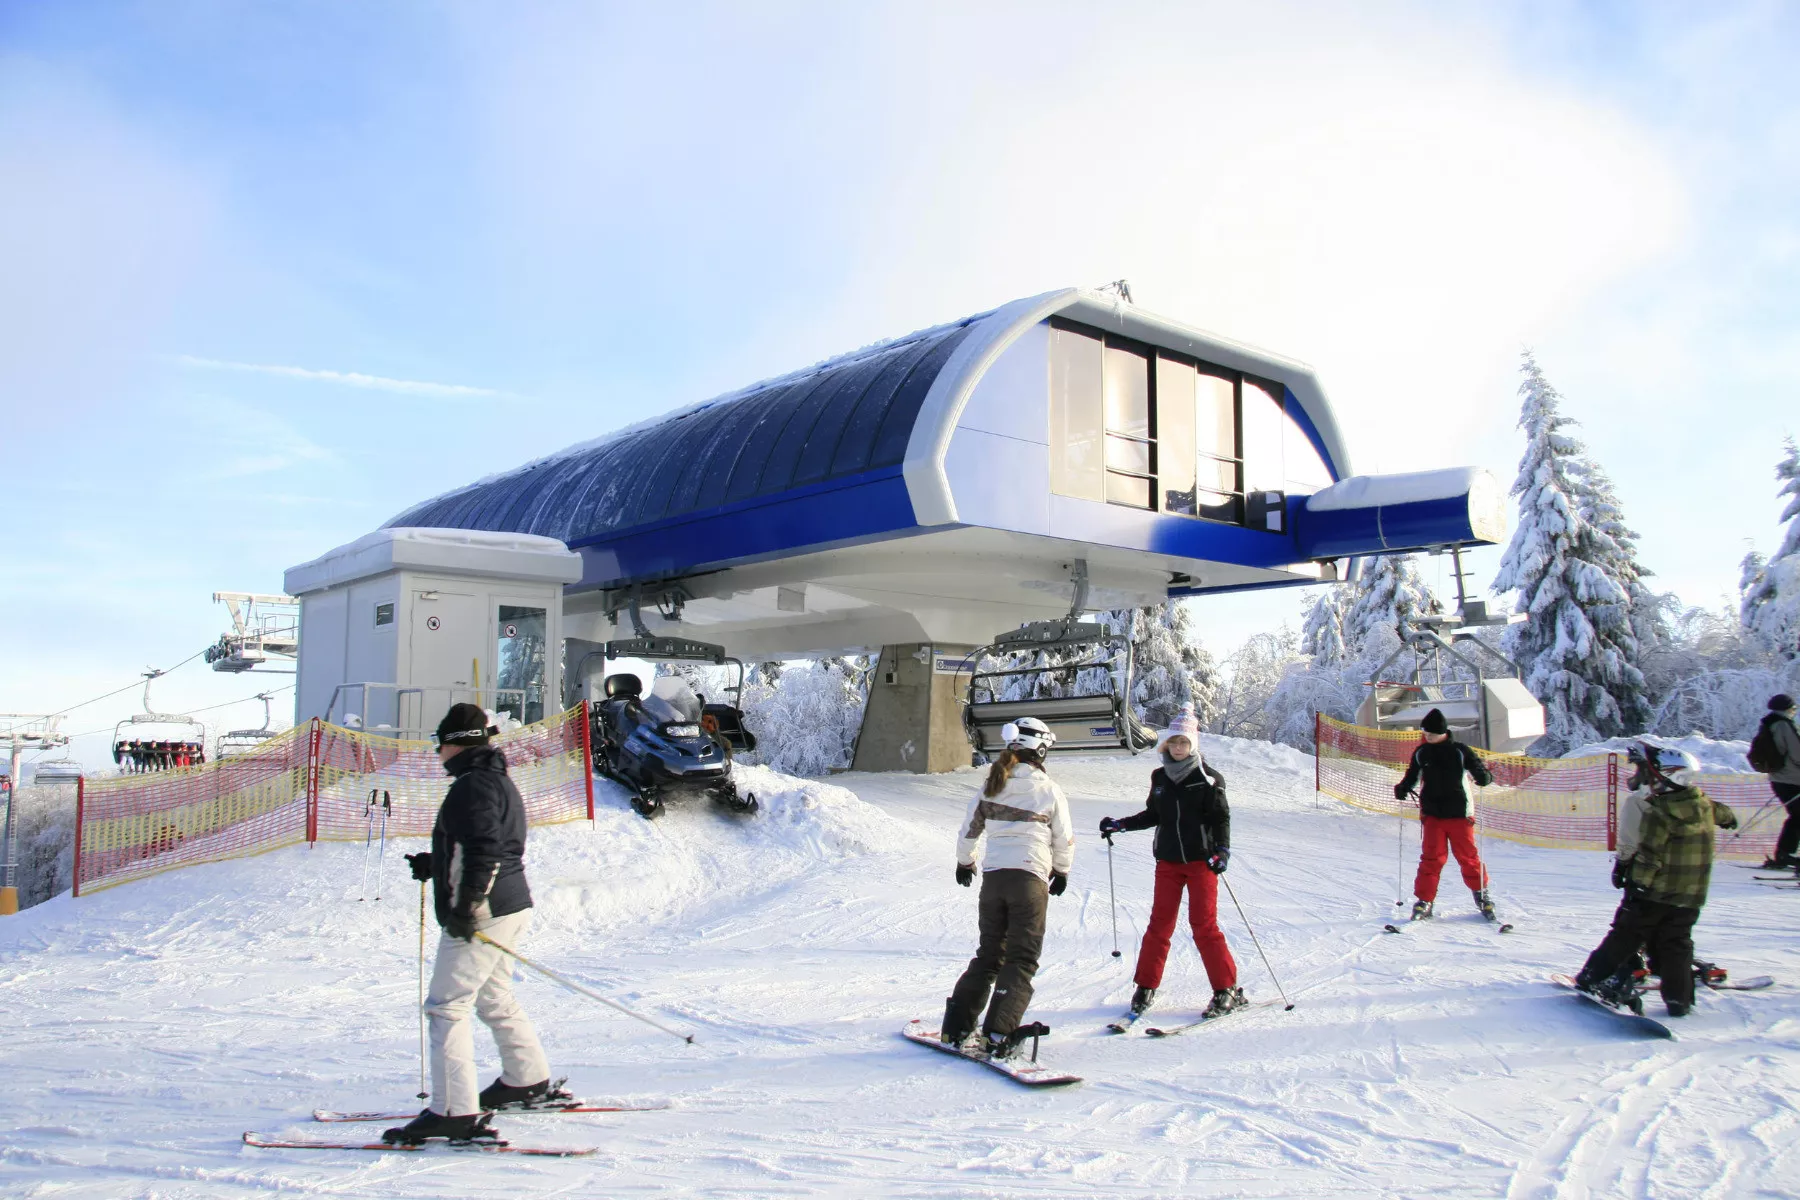 Winterberg Ski Resort in Germany, Europe | Snowboarding,Skiing - Rated 4